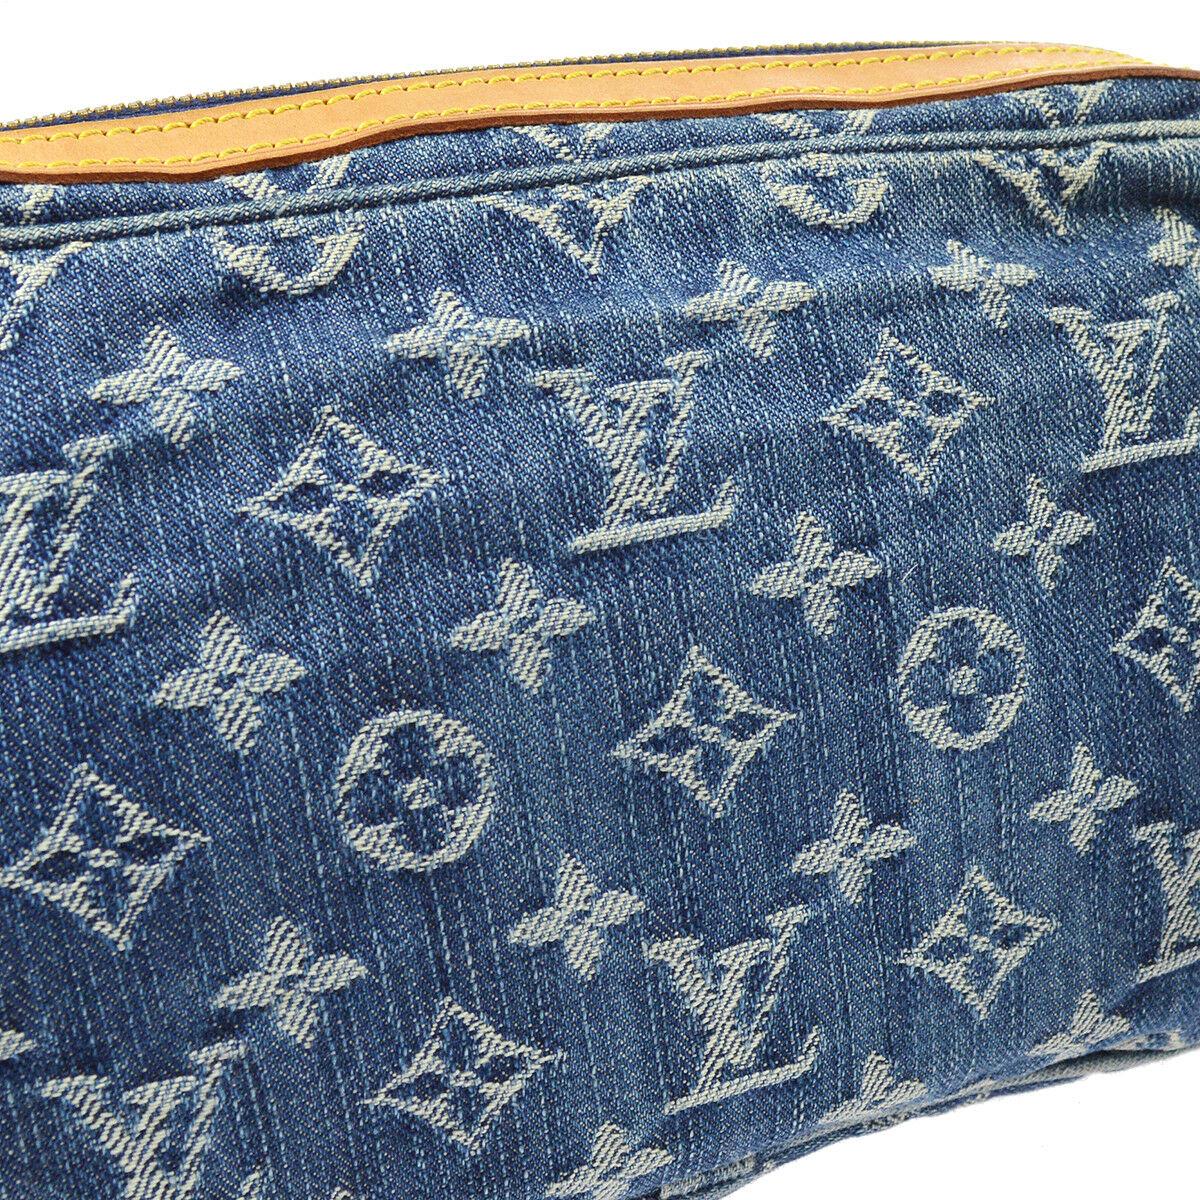 Louis Vuitton Blue Jean Denim Monogram Bum Fanny Pack Waist Belt Bag

Denim
Leather
Gold tone hardware
Woven lining
Date code present
Made in France
Adjustable belt size 34-45